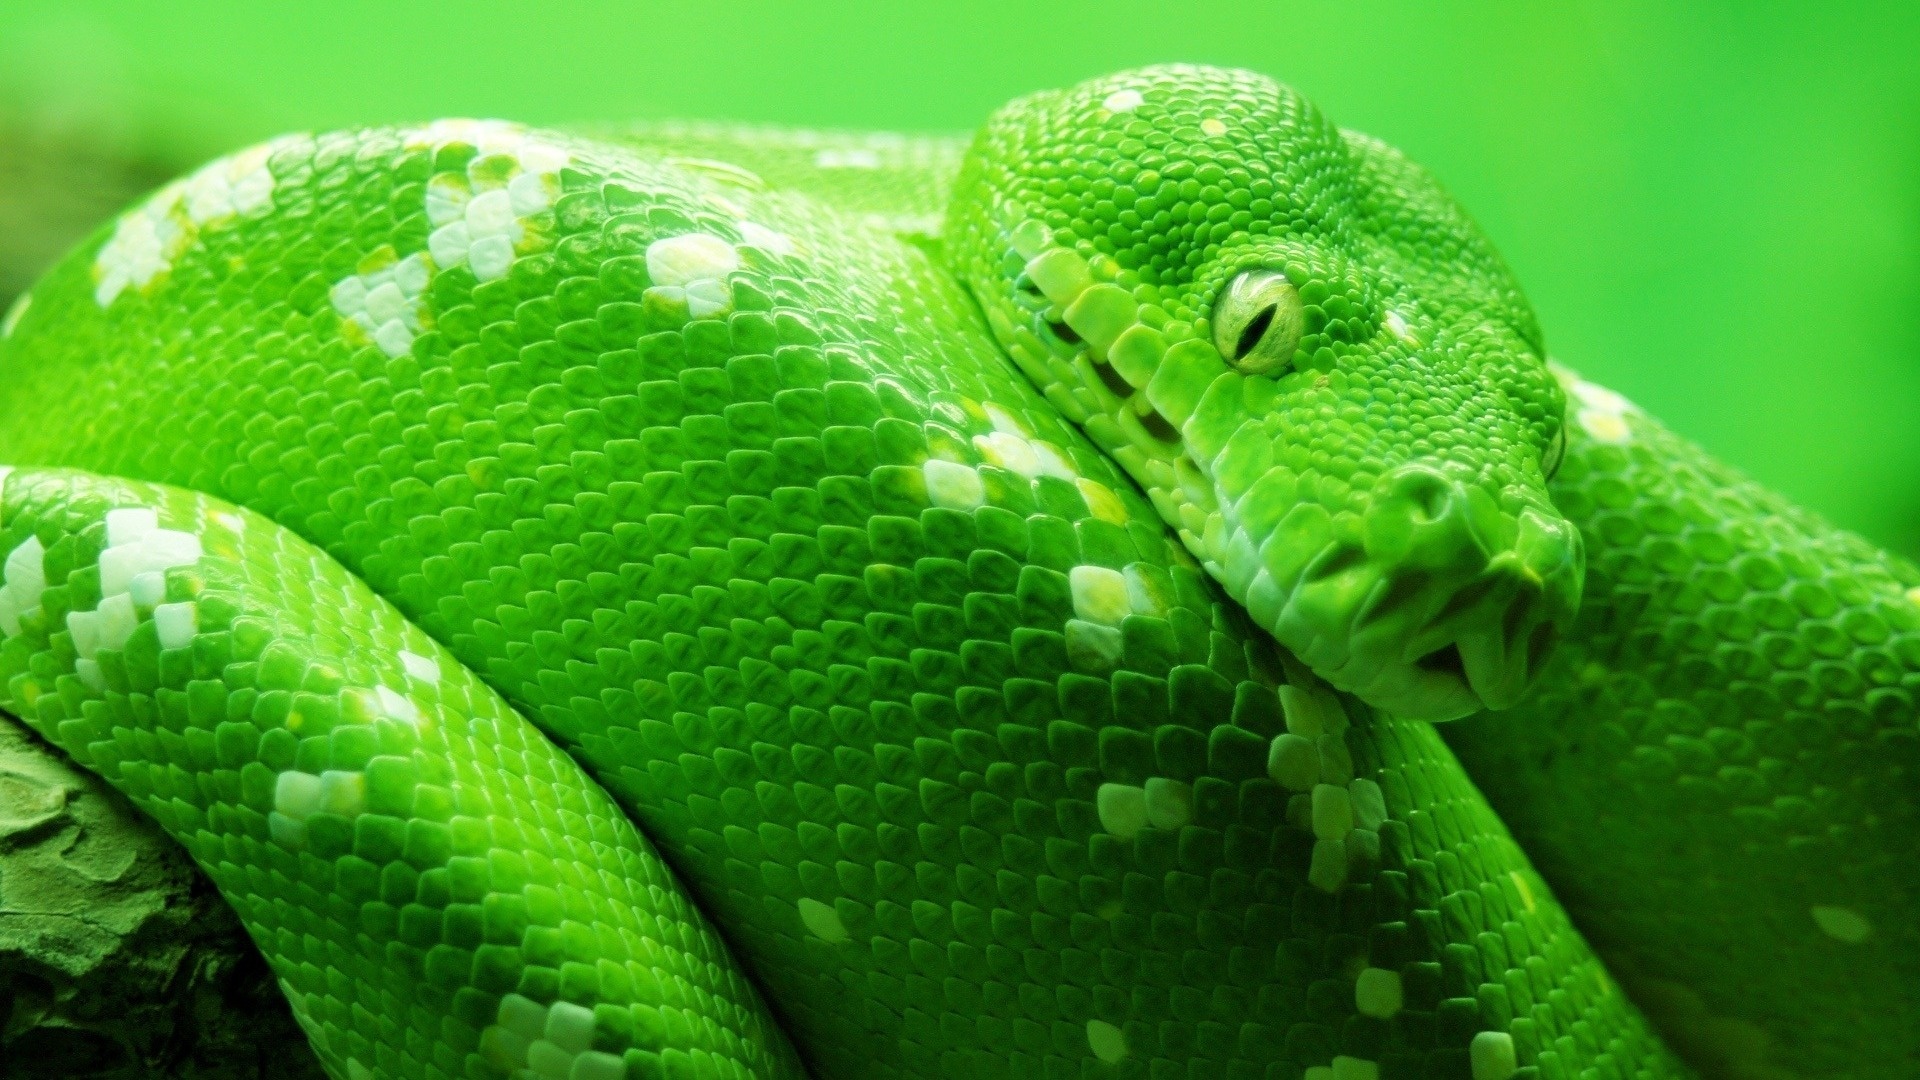 Cool HD Green Snake Wallpaper Here